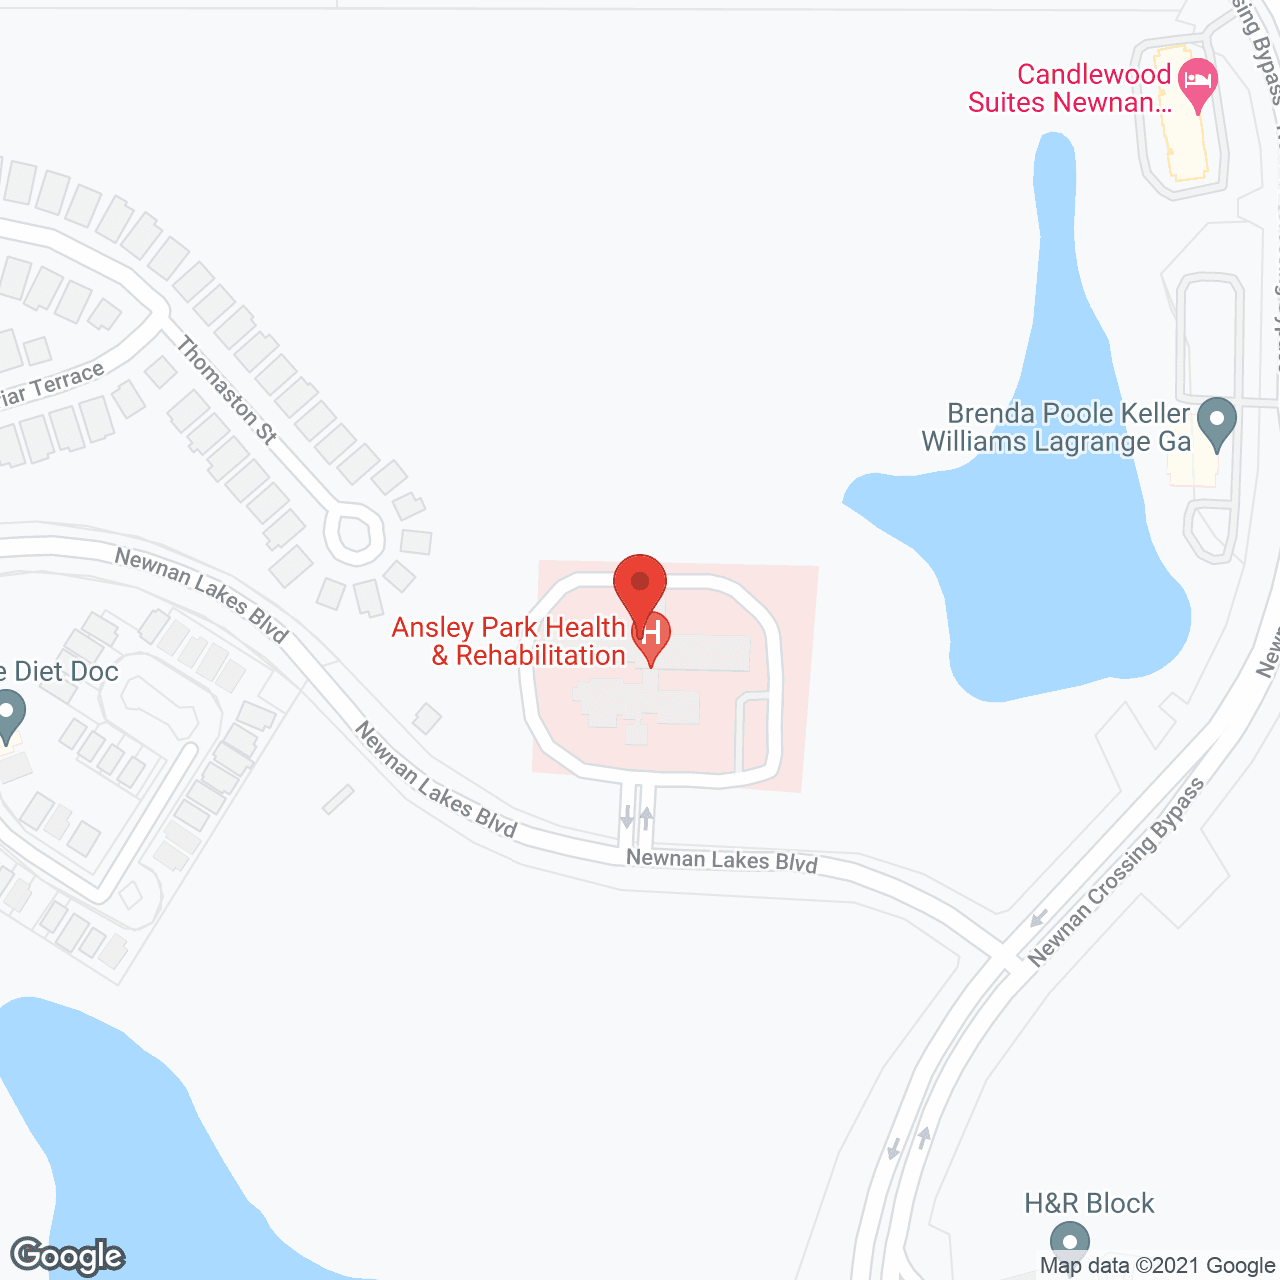 Ansley Park Health & Rehabilitation in google map